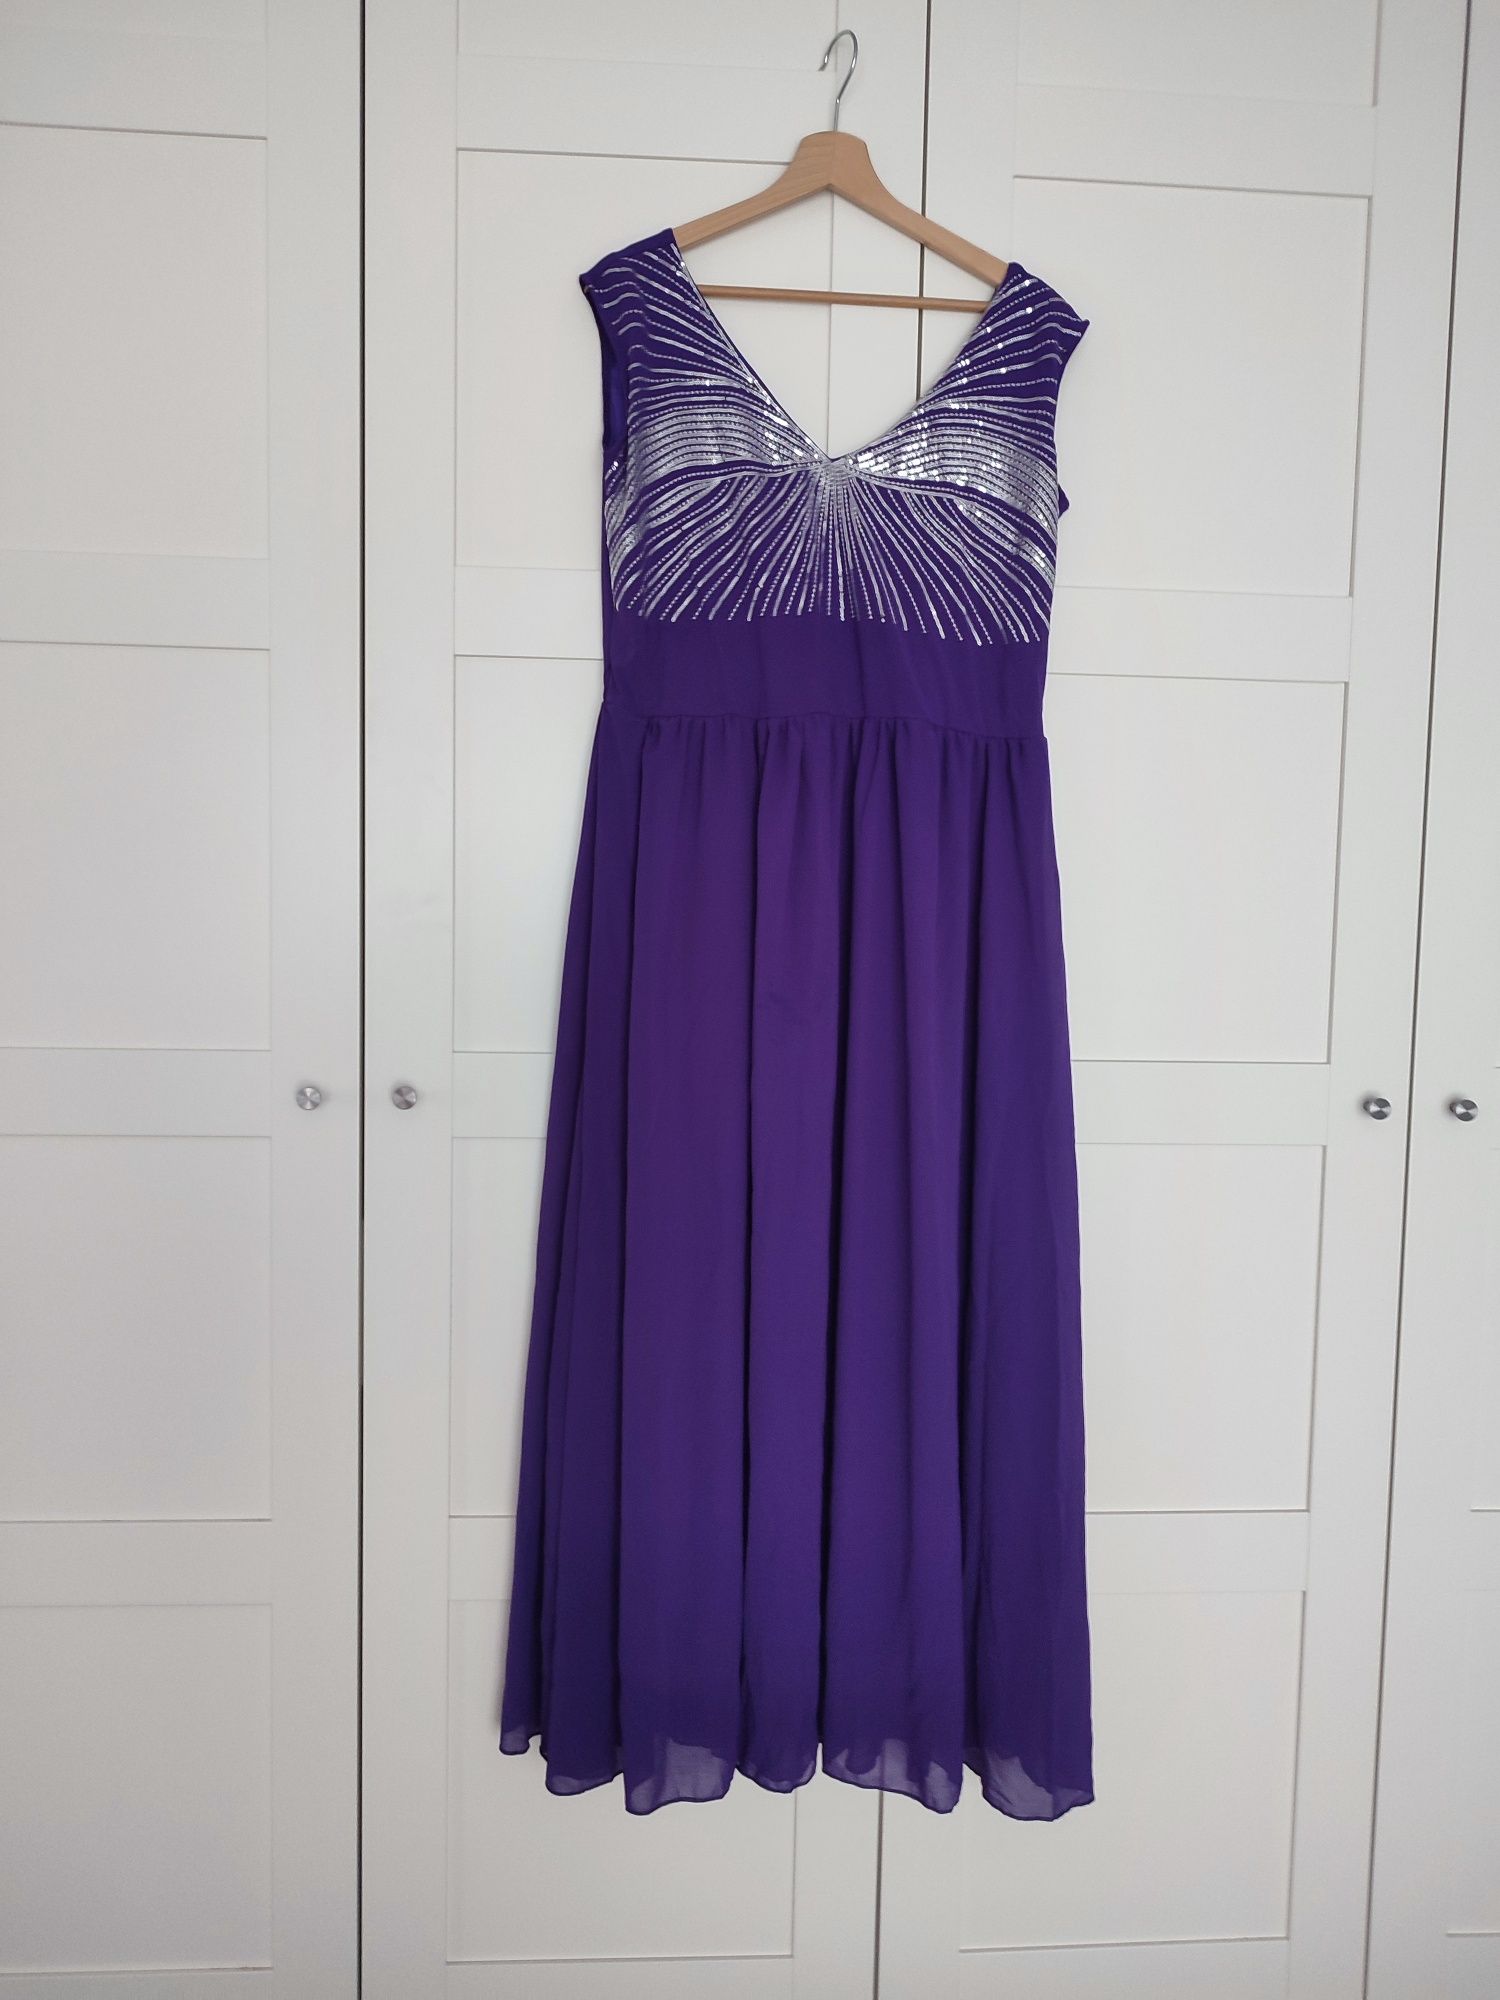 Sukienka fioletowa elegancka na wesele  46 Sydneys Closet